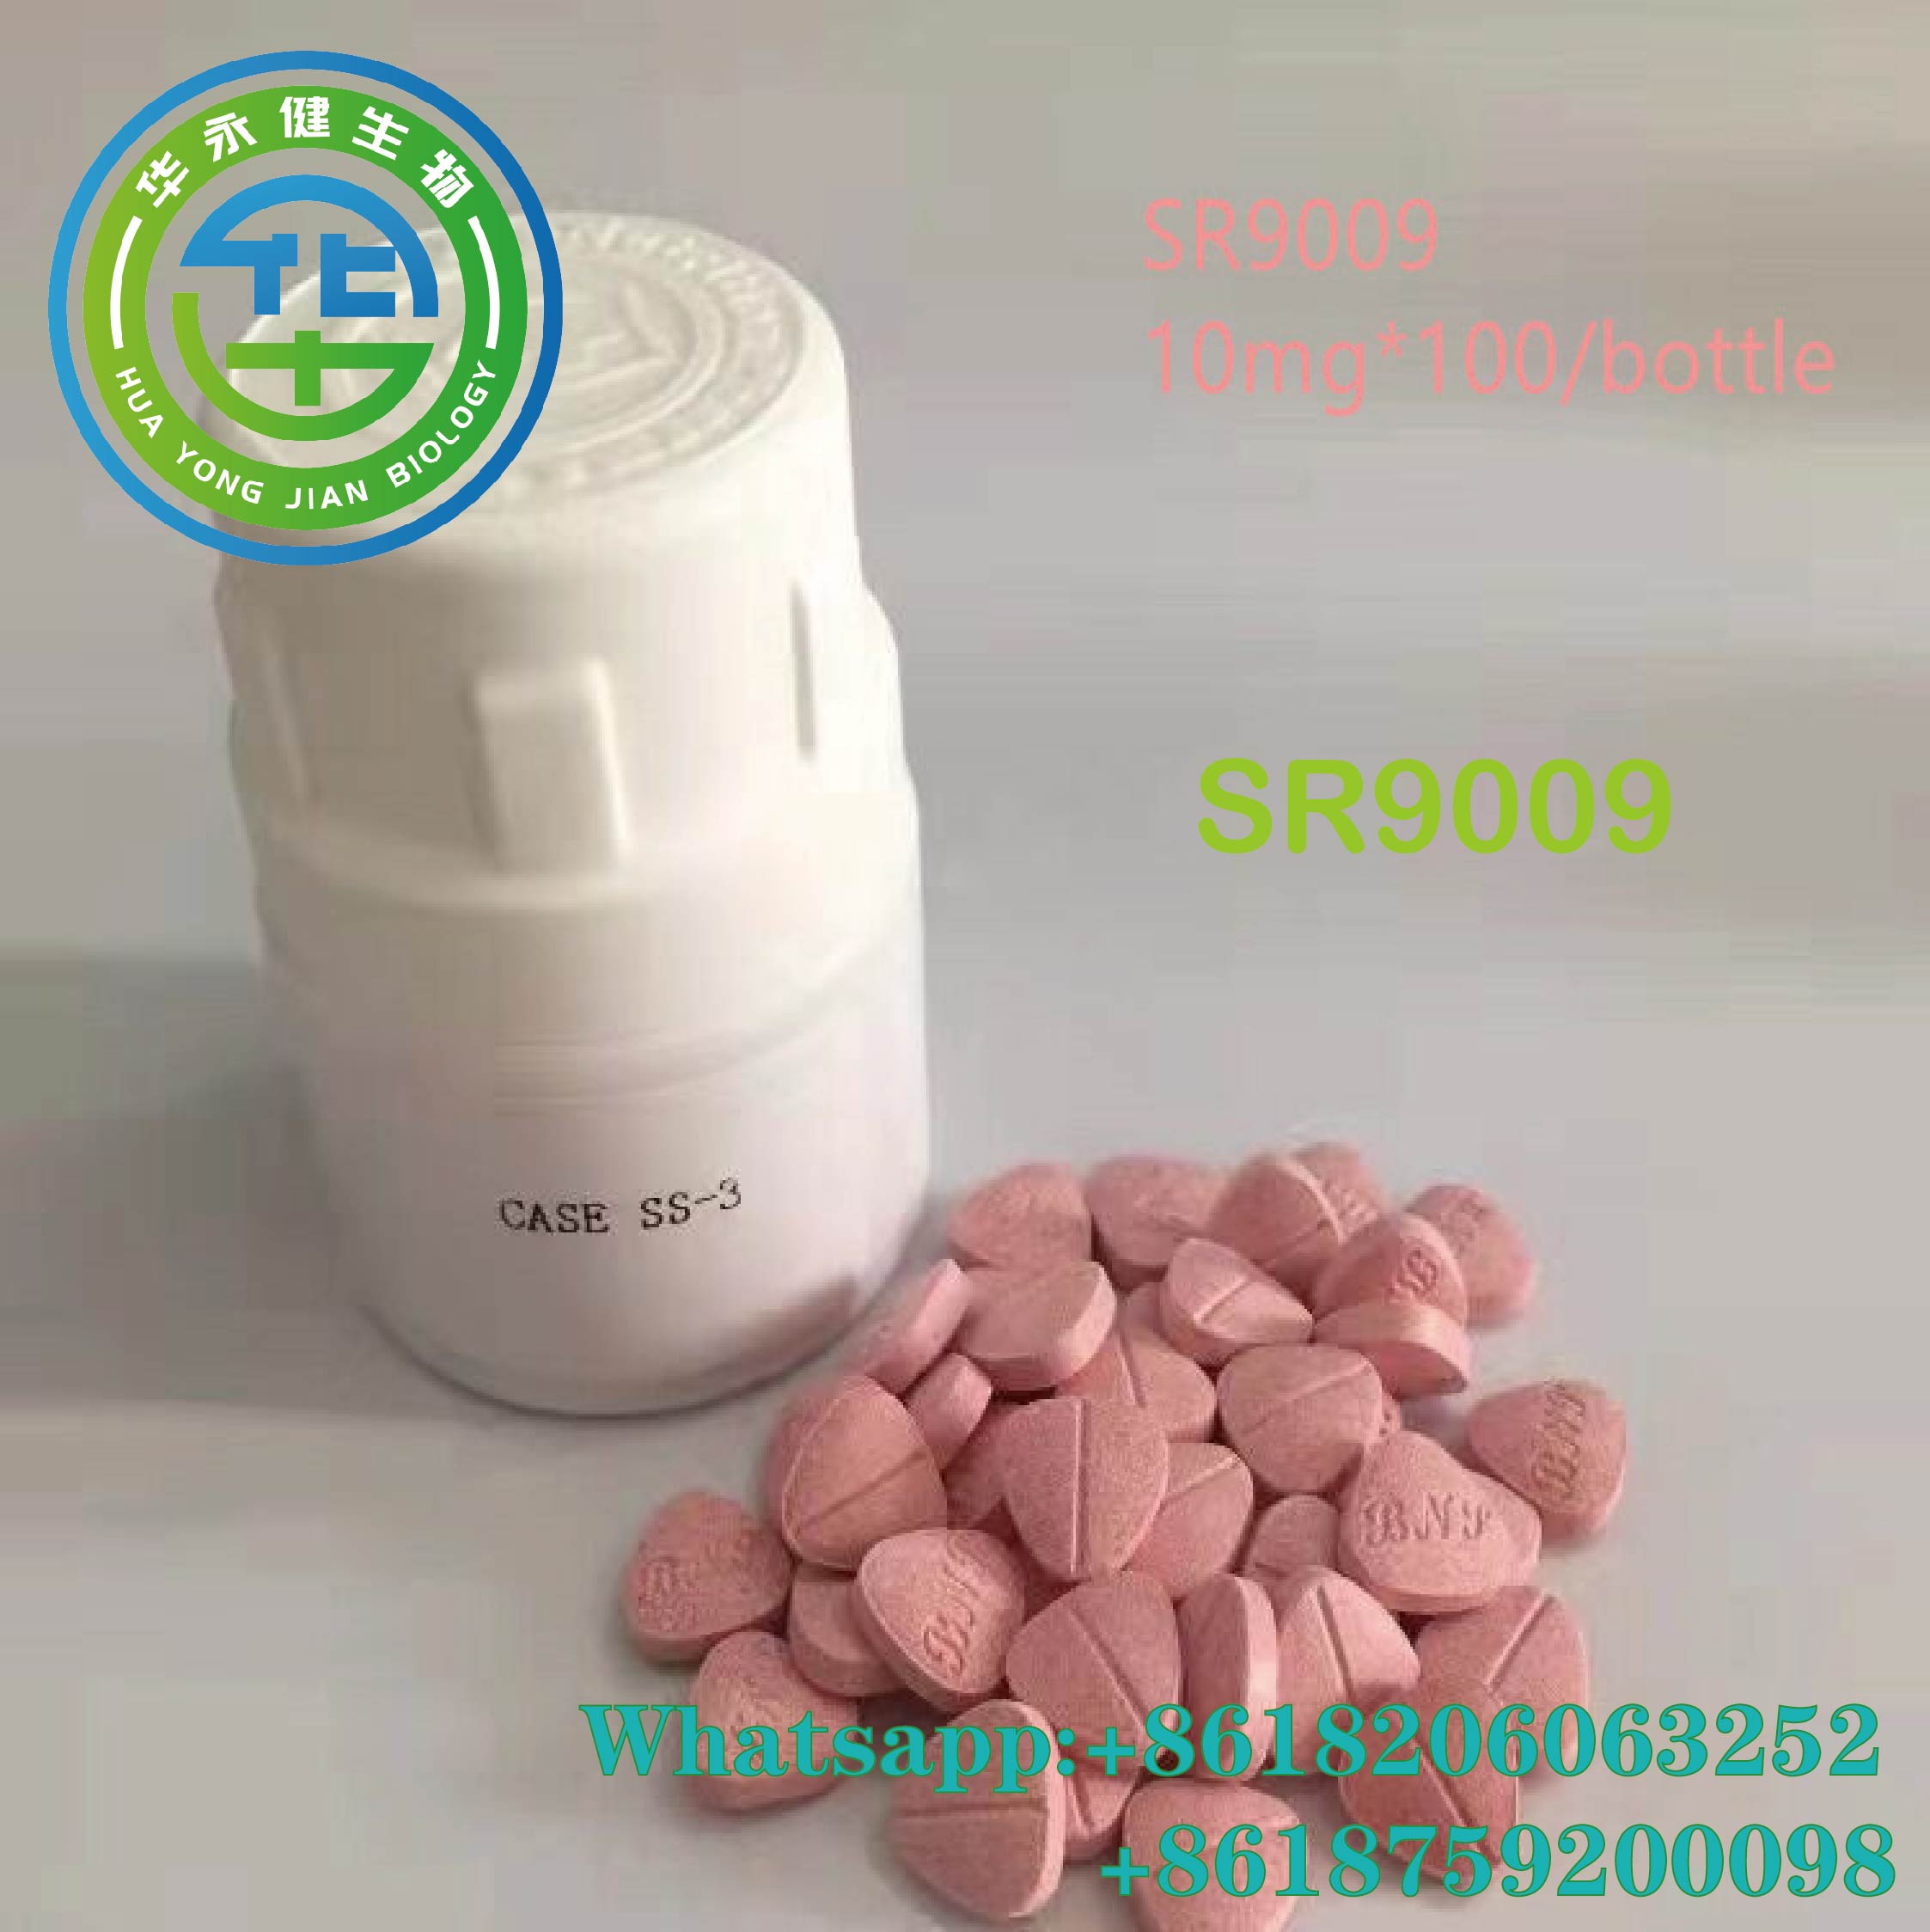 Fat Loss SR9009 10mg*100pcs/bottle SARMs Raw Powder Stenabolic CAS 1379686-30-2